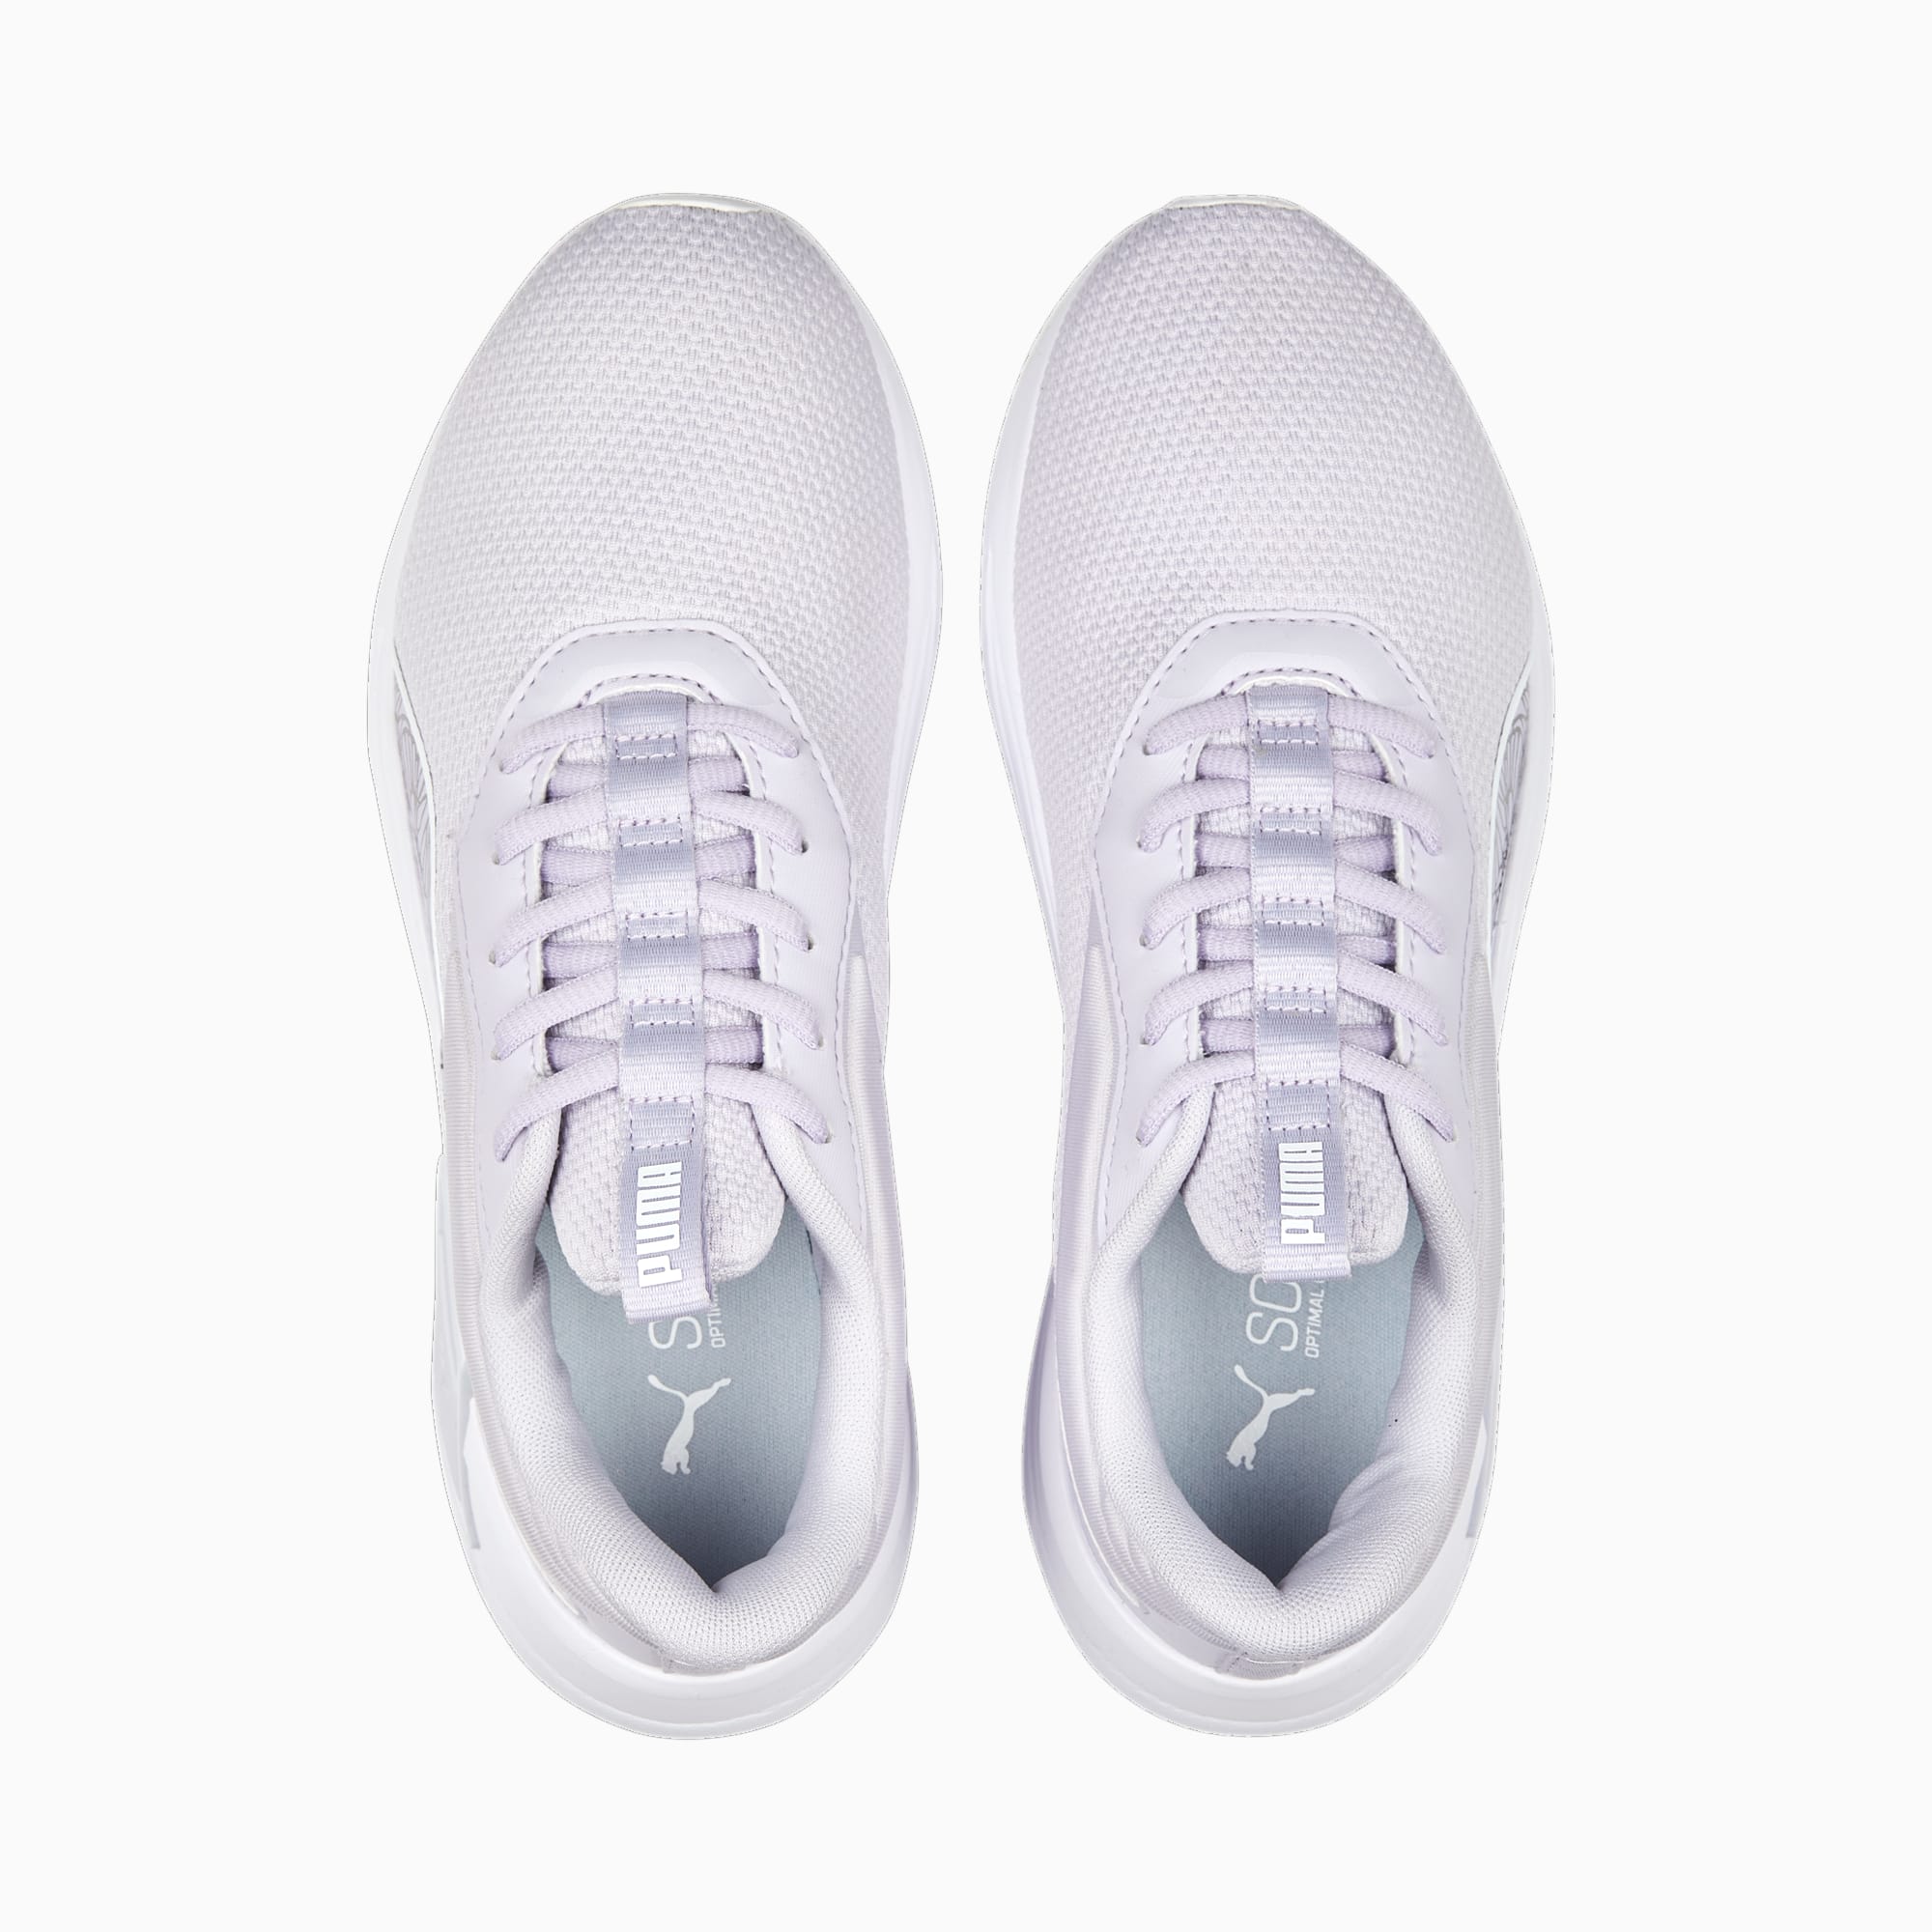 PUMA Lex Nova Shine Running Shoes Women Sneakers, Spring Lavender/White, Size 35,5, Shoes